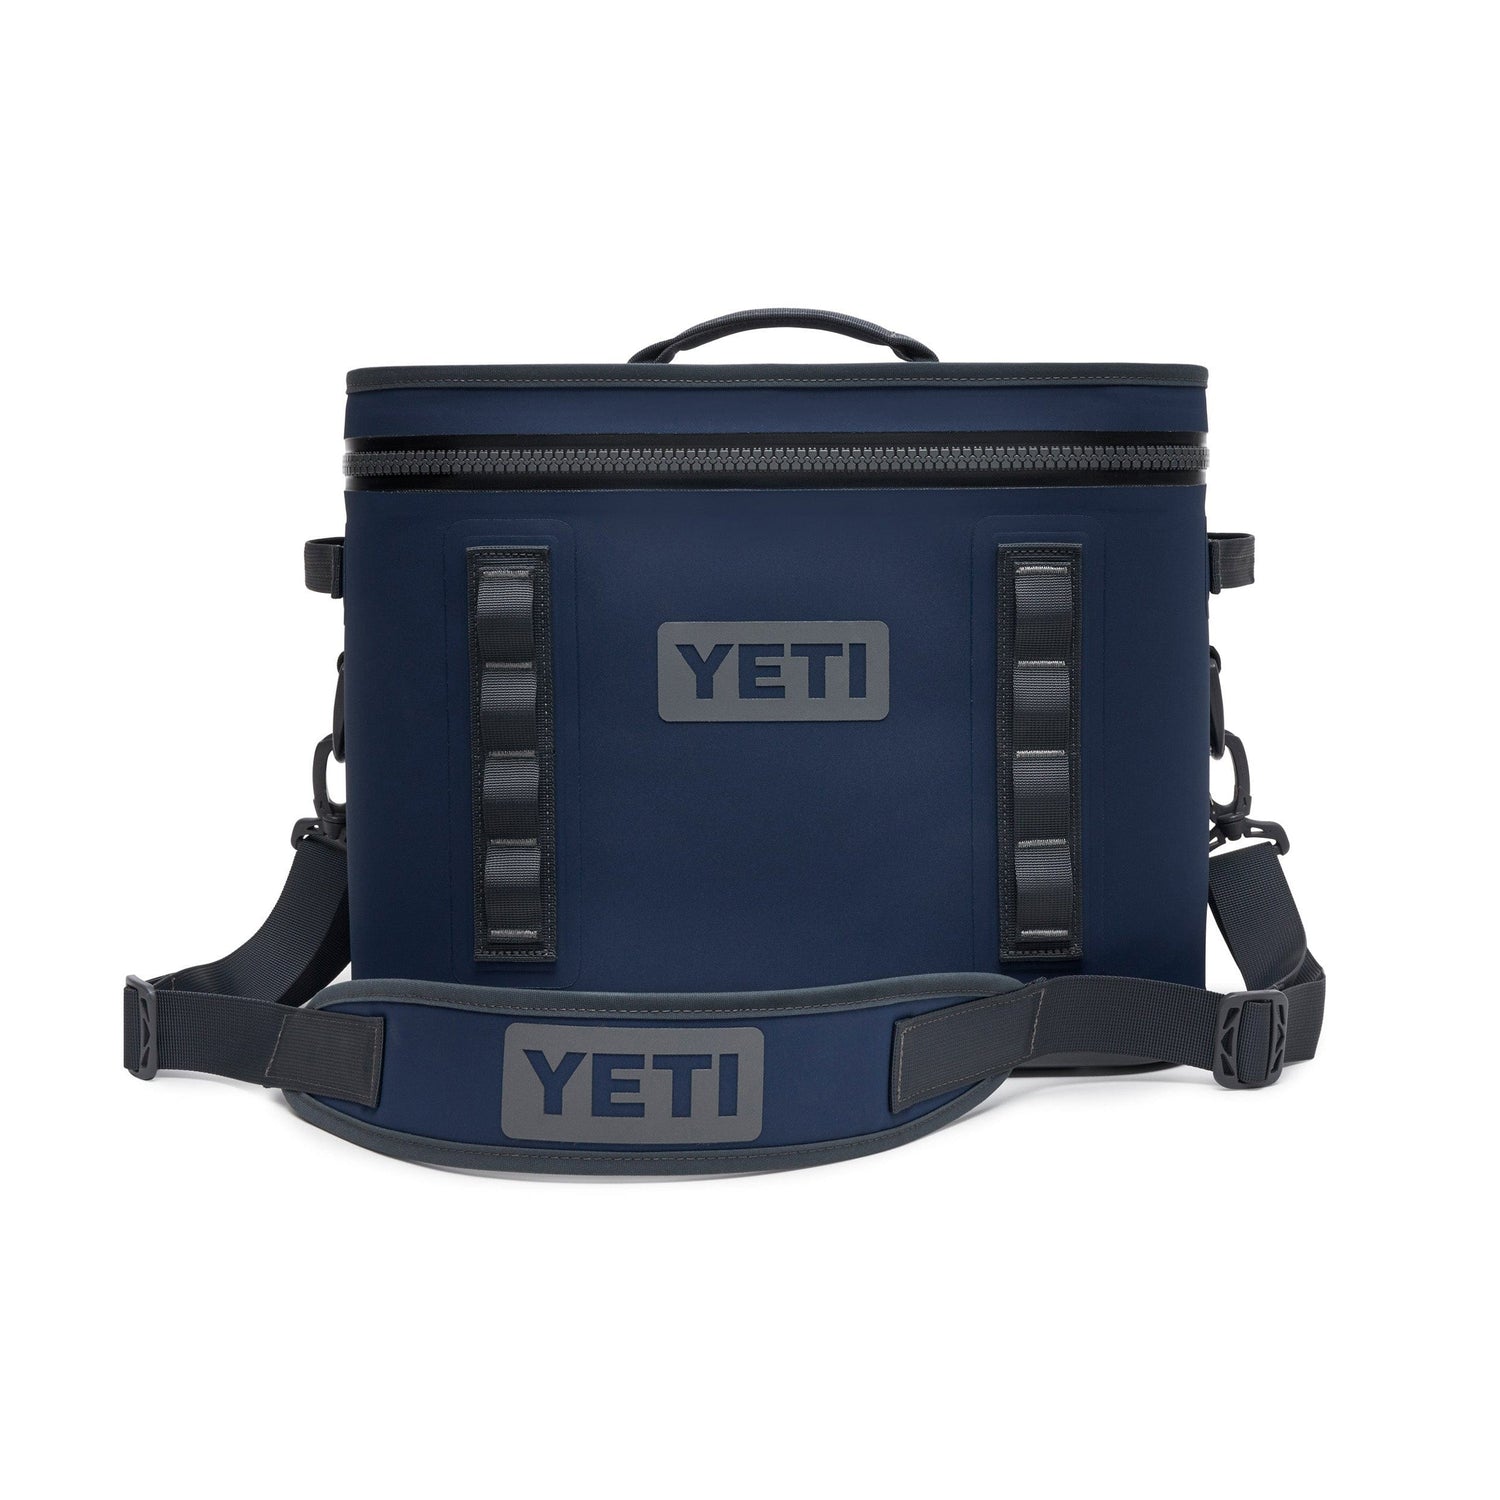 YETI Hopper 30 - 30 Quart Extreme Portable Soft Cooler